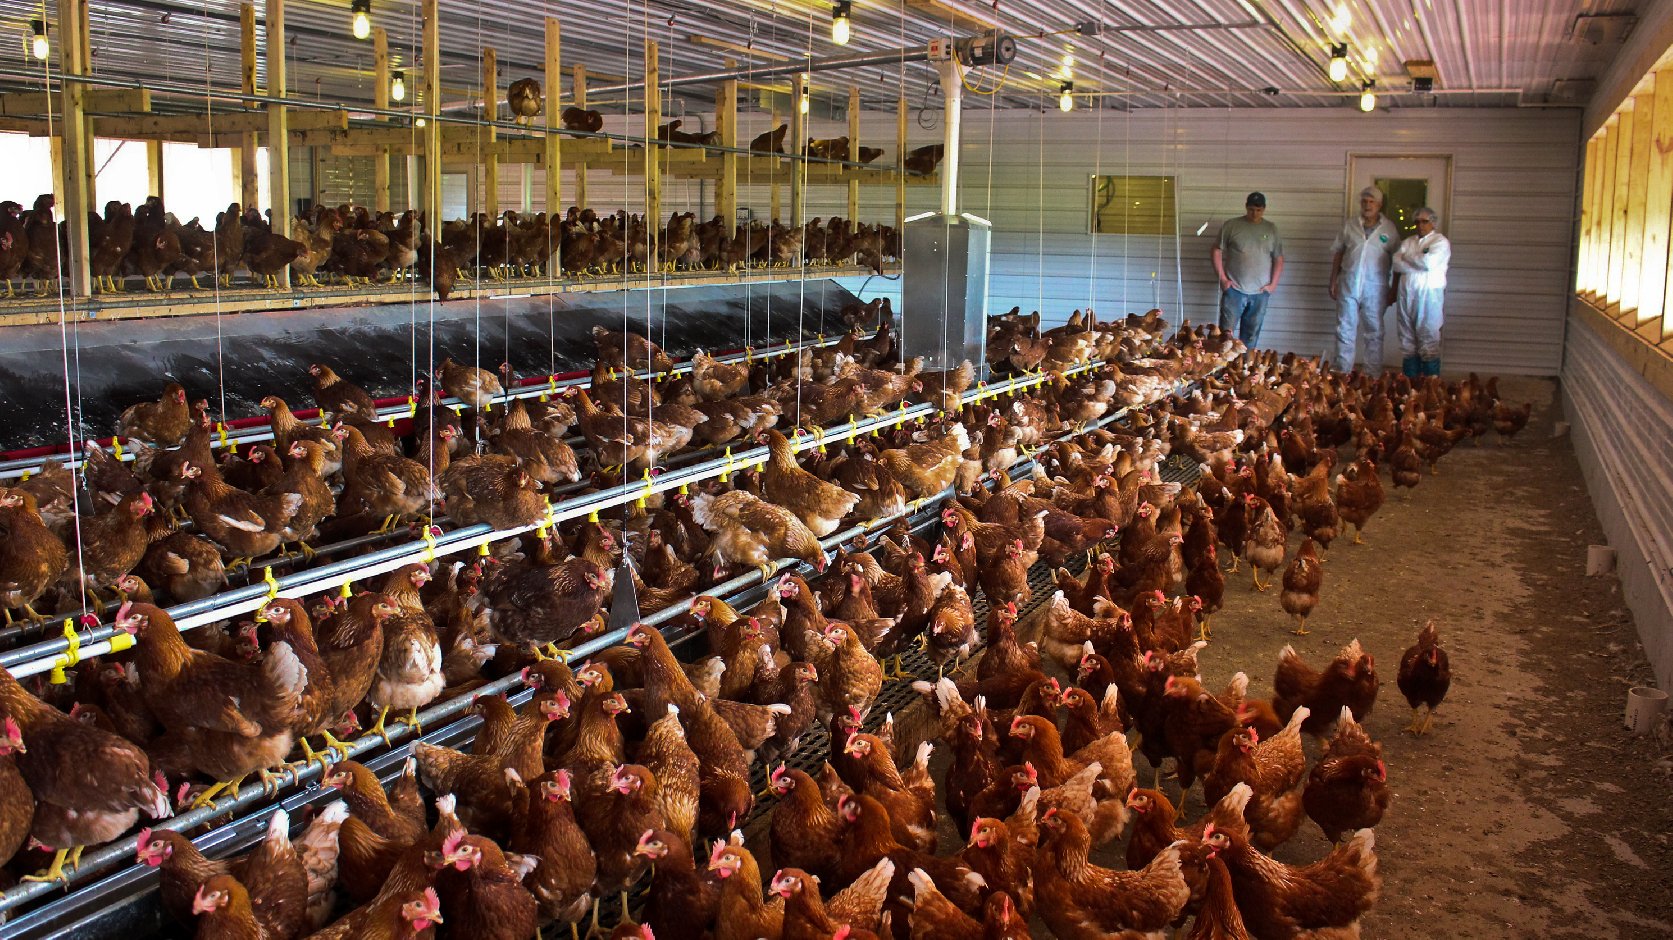 Free-range chickens lay eggs for Sauder's Quality Eggs in Pennsylvania. Photo: Dan Charles/NPR